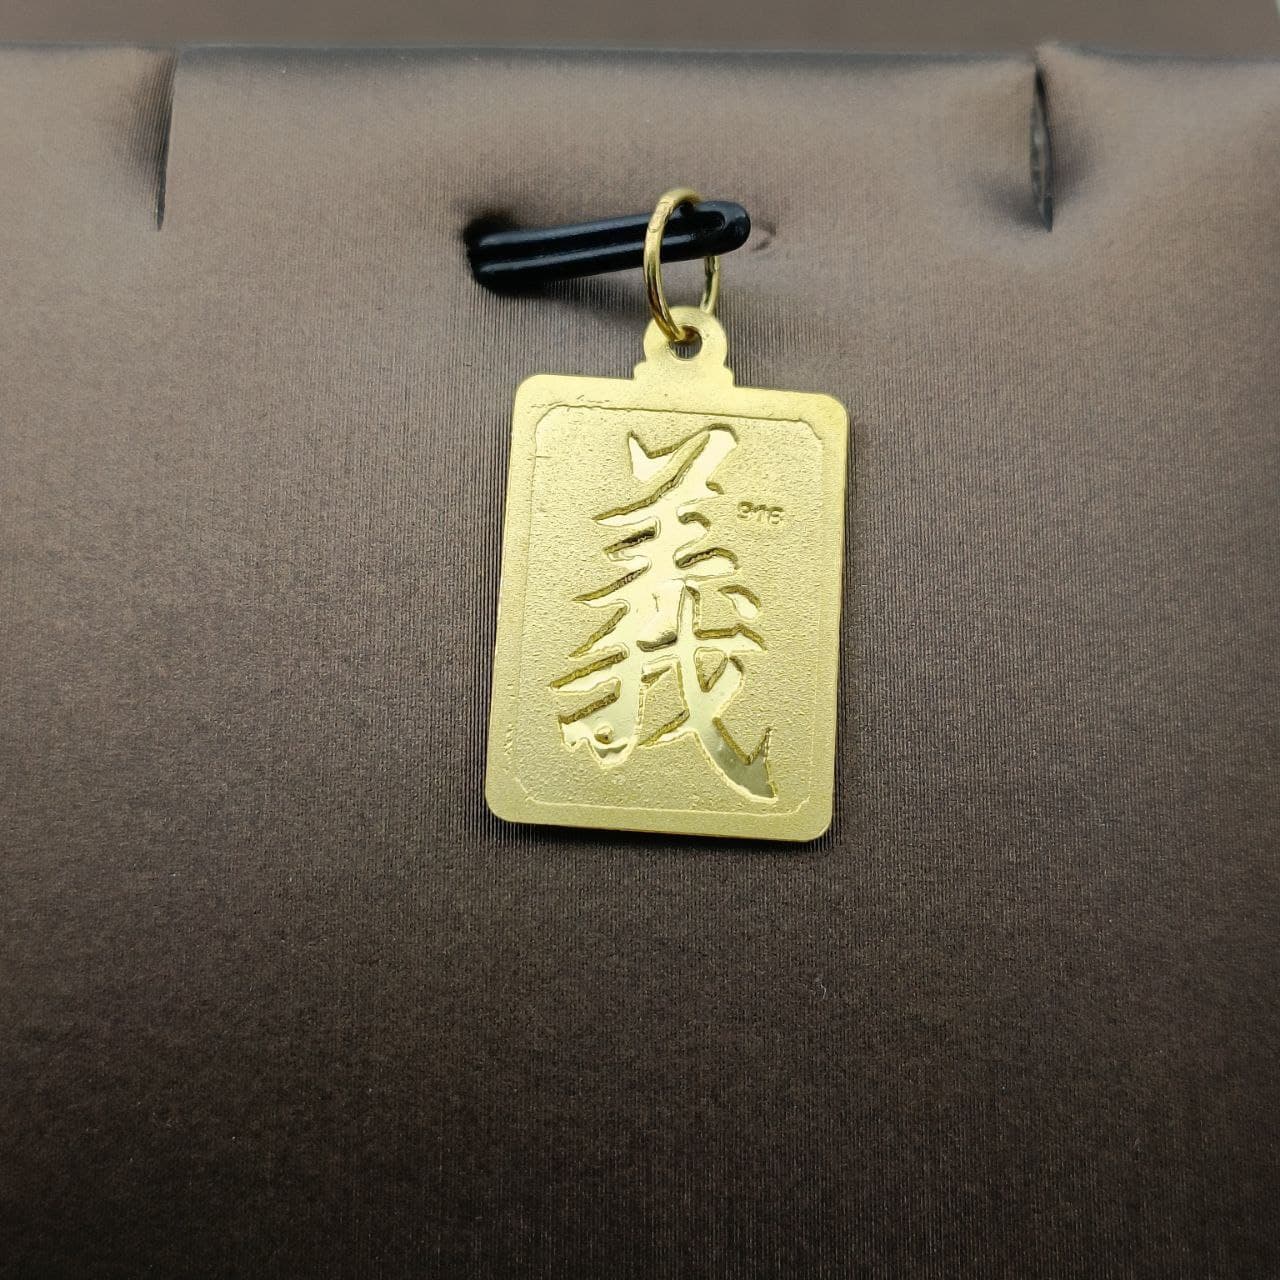 22k / 916 Gold Kwang Gong Pendant-Charms & Pendants-Best Gold Shop